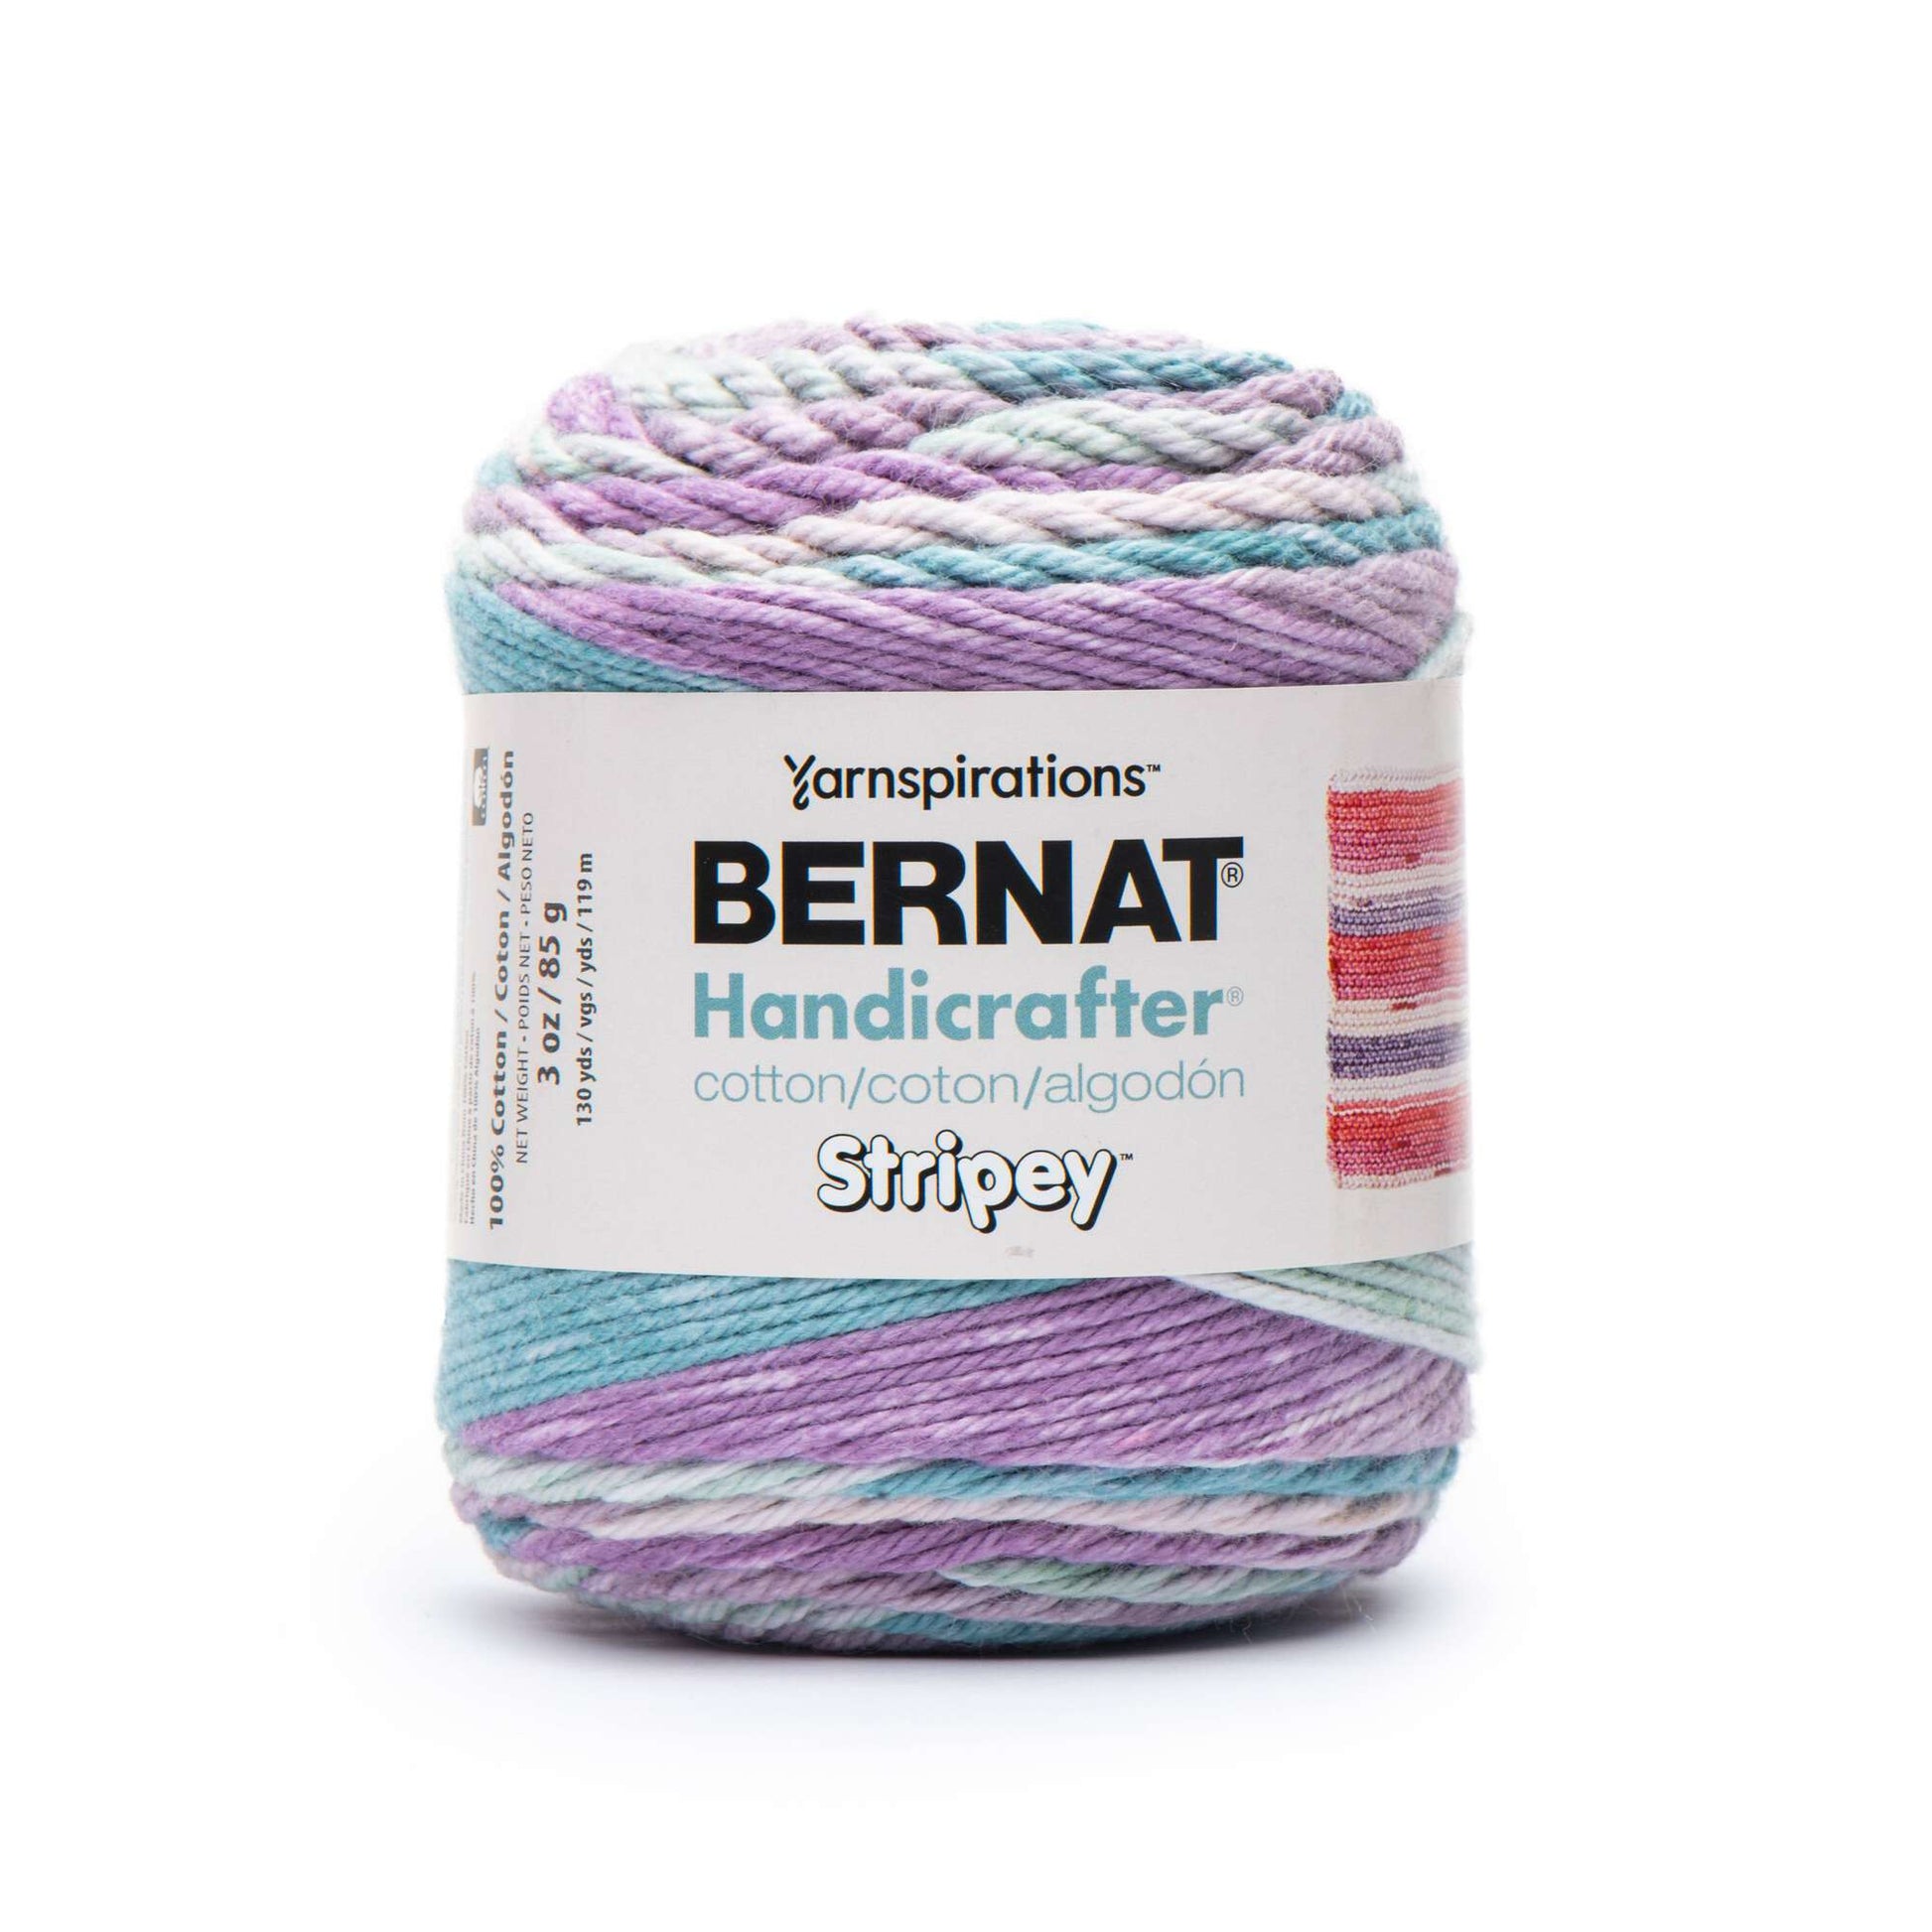 Ravelry: Bernat Handicrafter Cotton Stripey